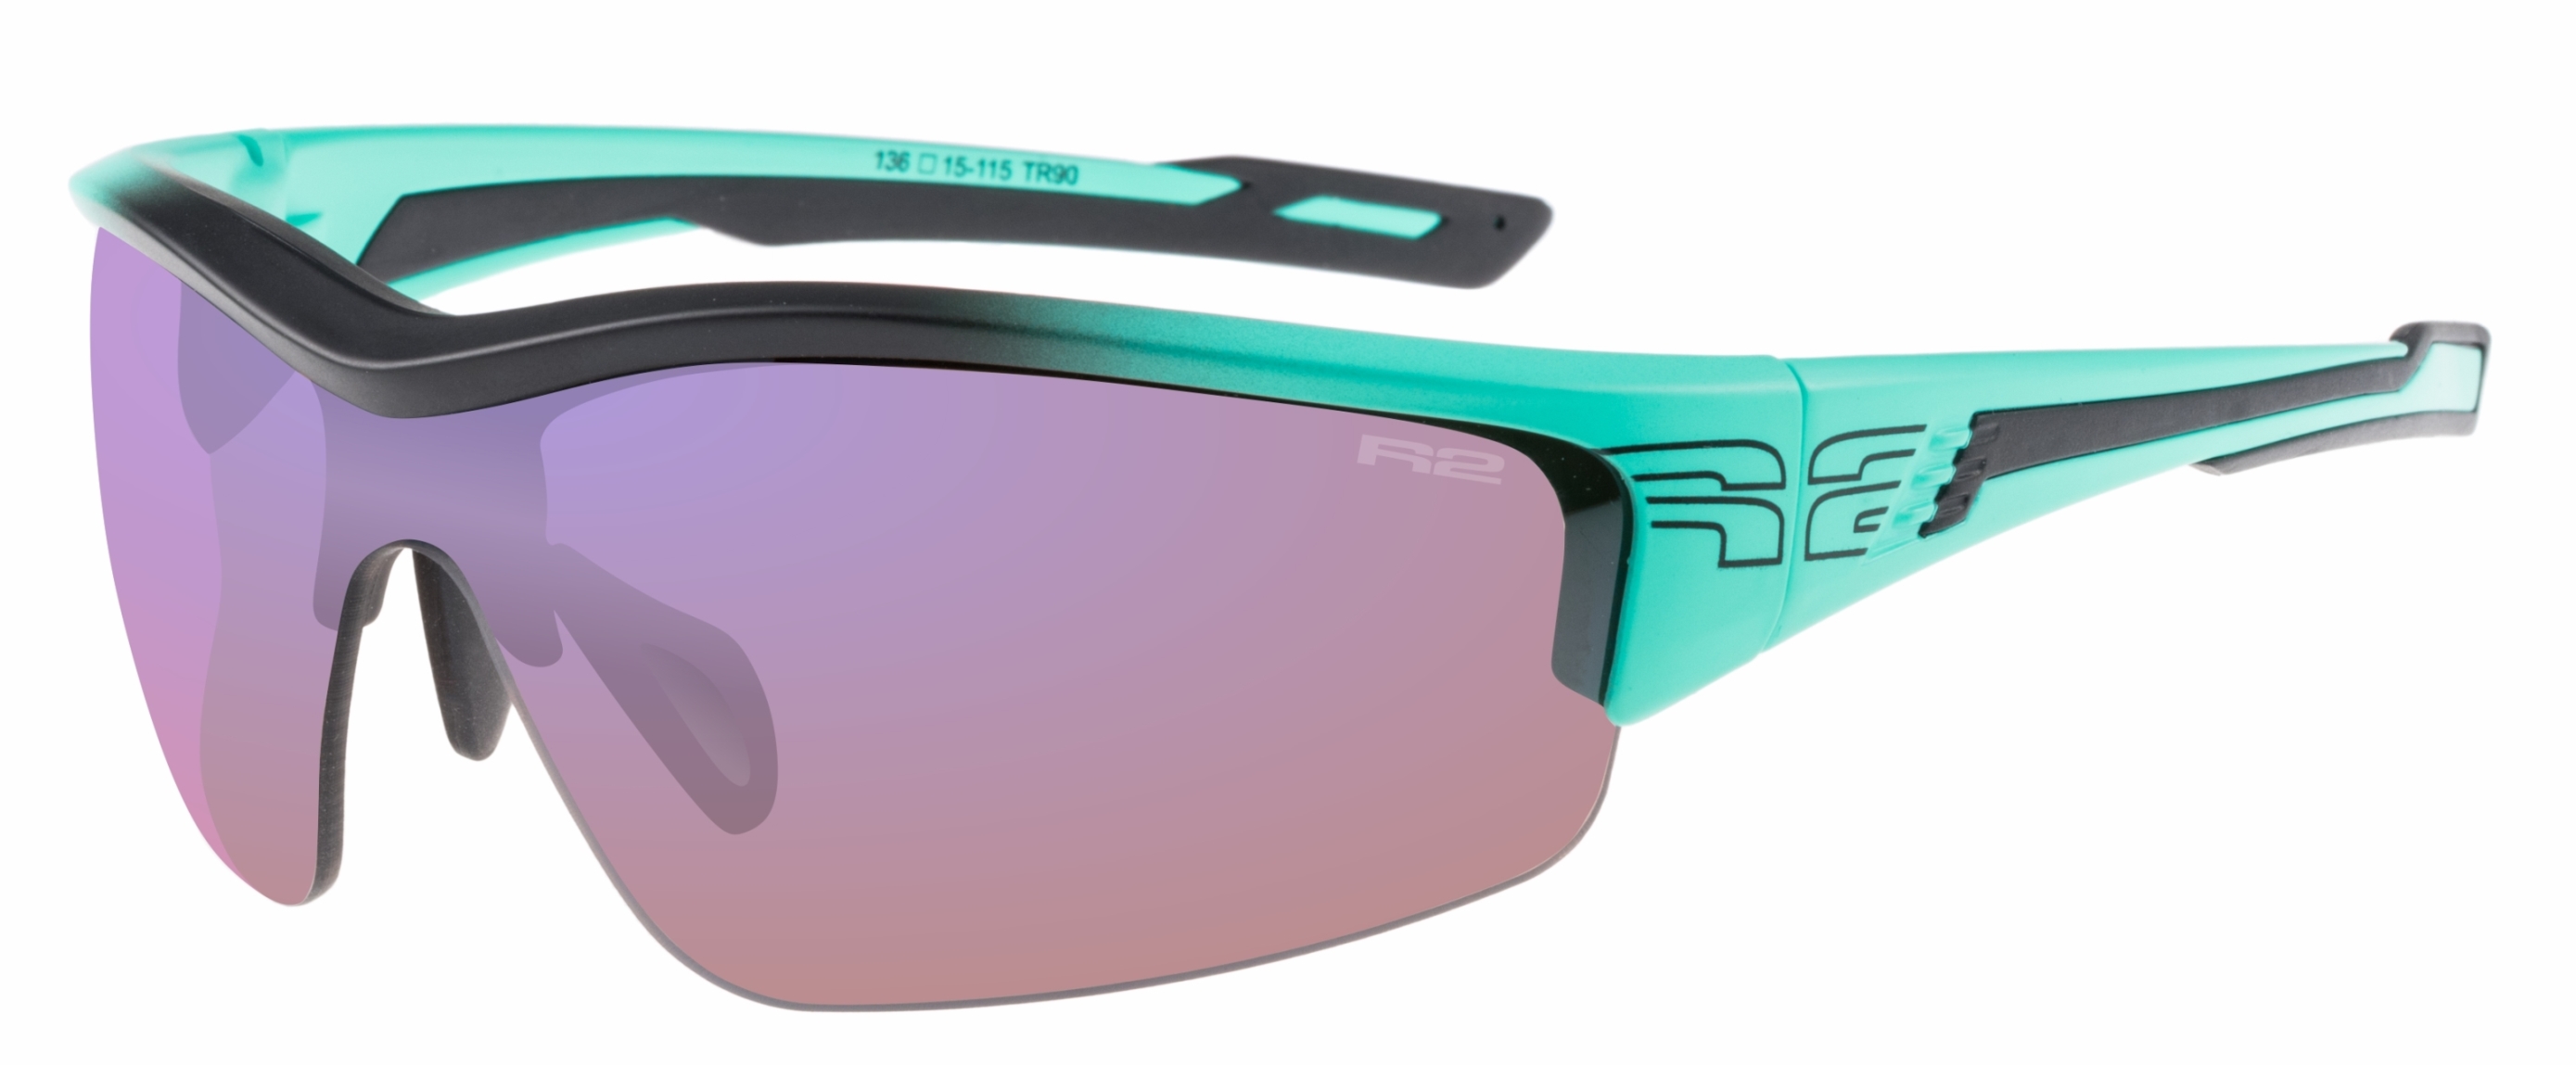 HD sport sunglasses R2 WHEELLER AT038P